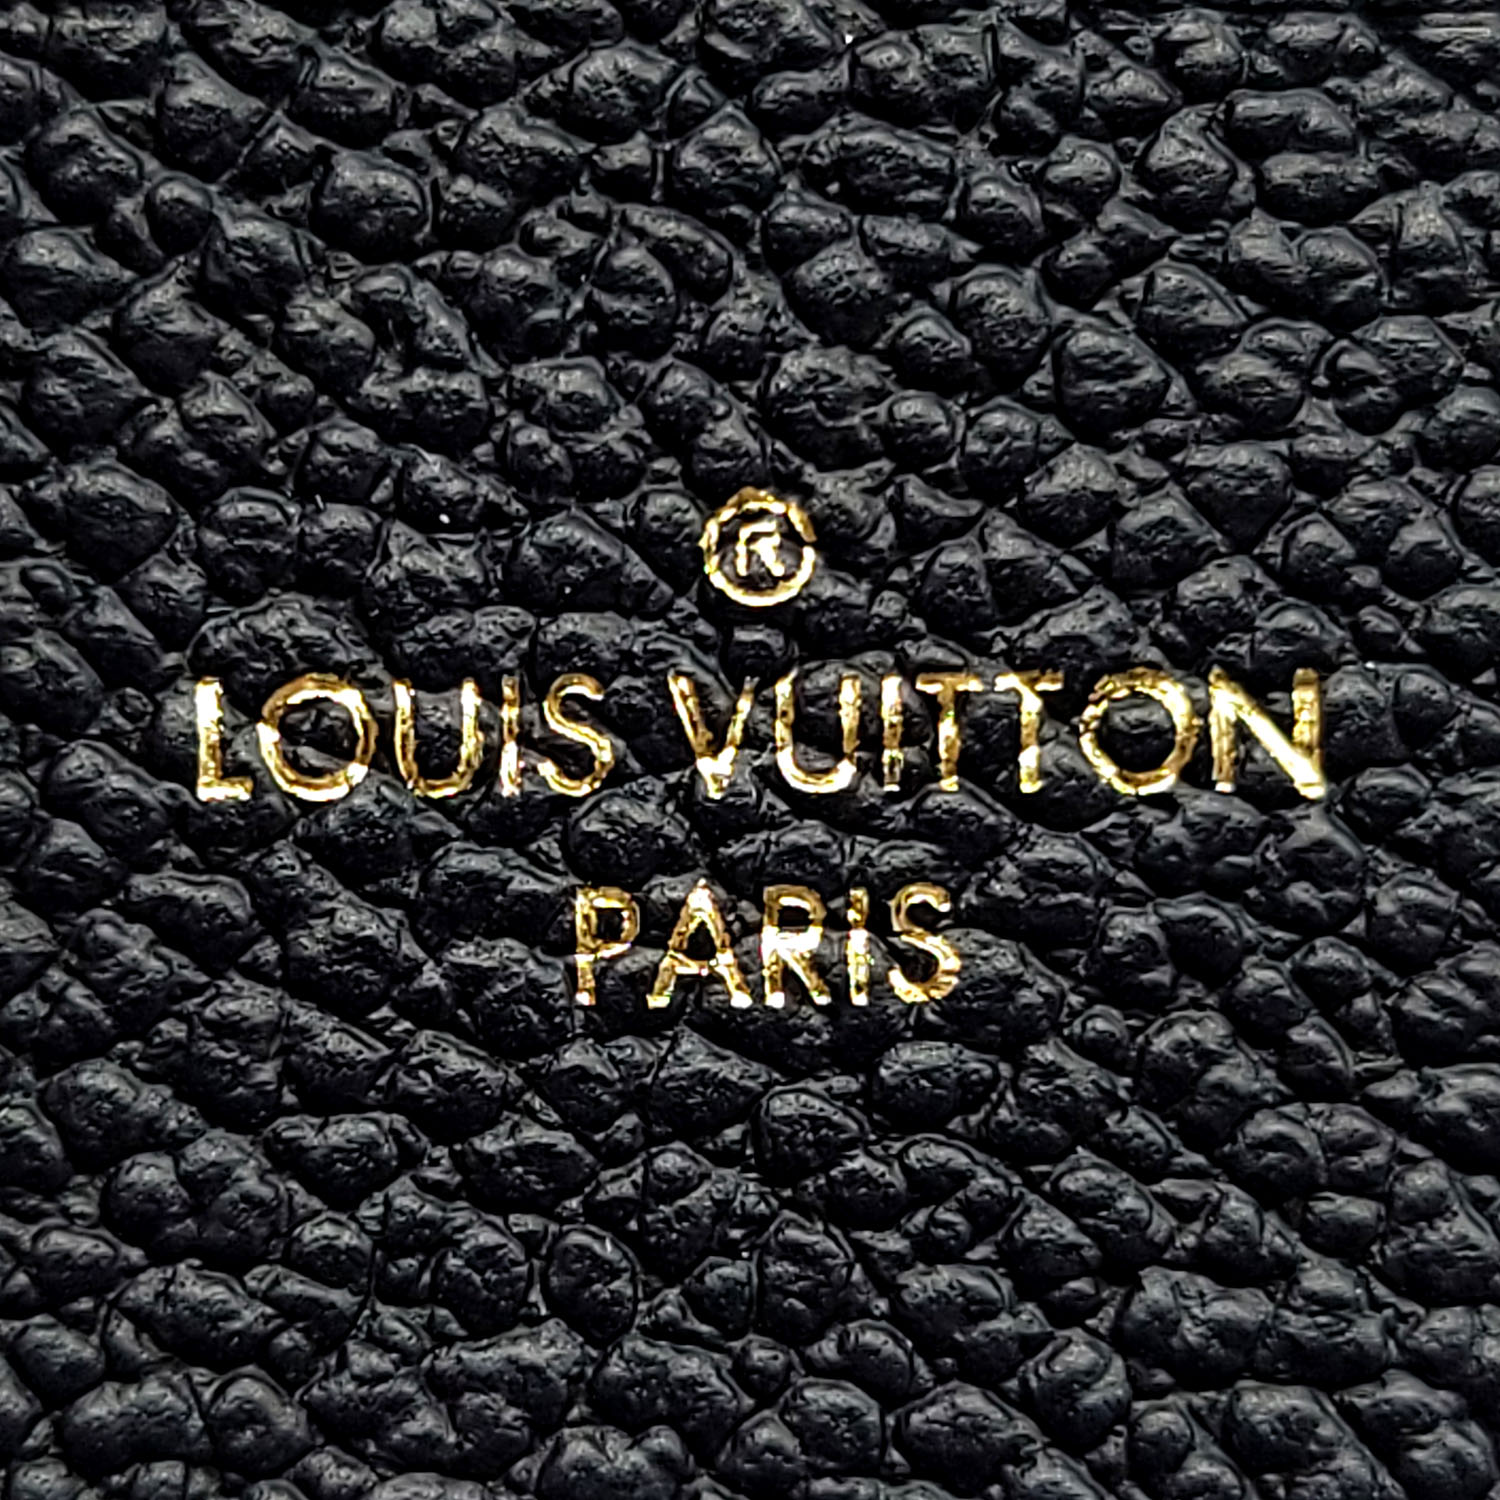 Pochette alpha triple cloth small bag Louis Vuitton Navy in Cloth - 32417222